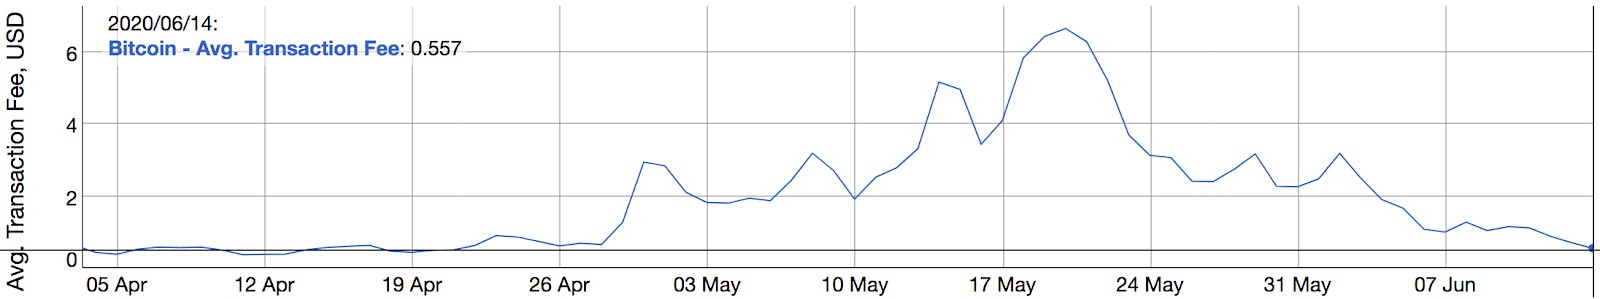 WhatsApp Image 2020 06 15 at 14.45.54 - کارمزدهای تراکنش بیت کوین نسبت به میزان آن در ماه آپریل، به کمتر از 1 دلار کاهش یافته است!